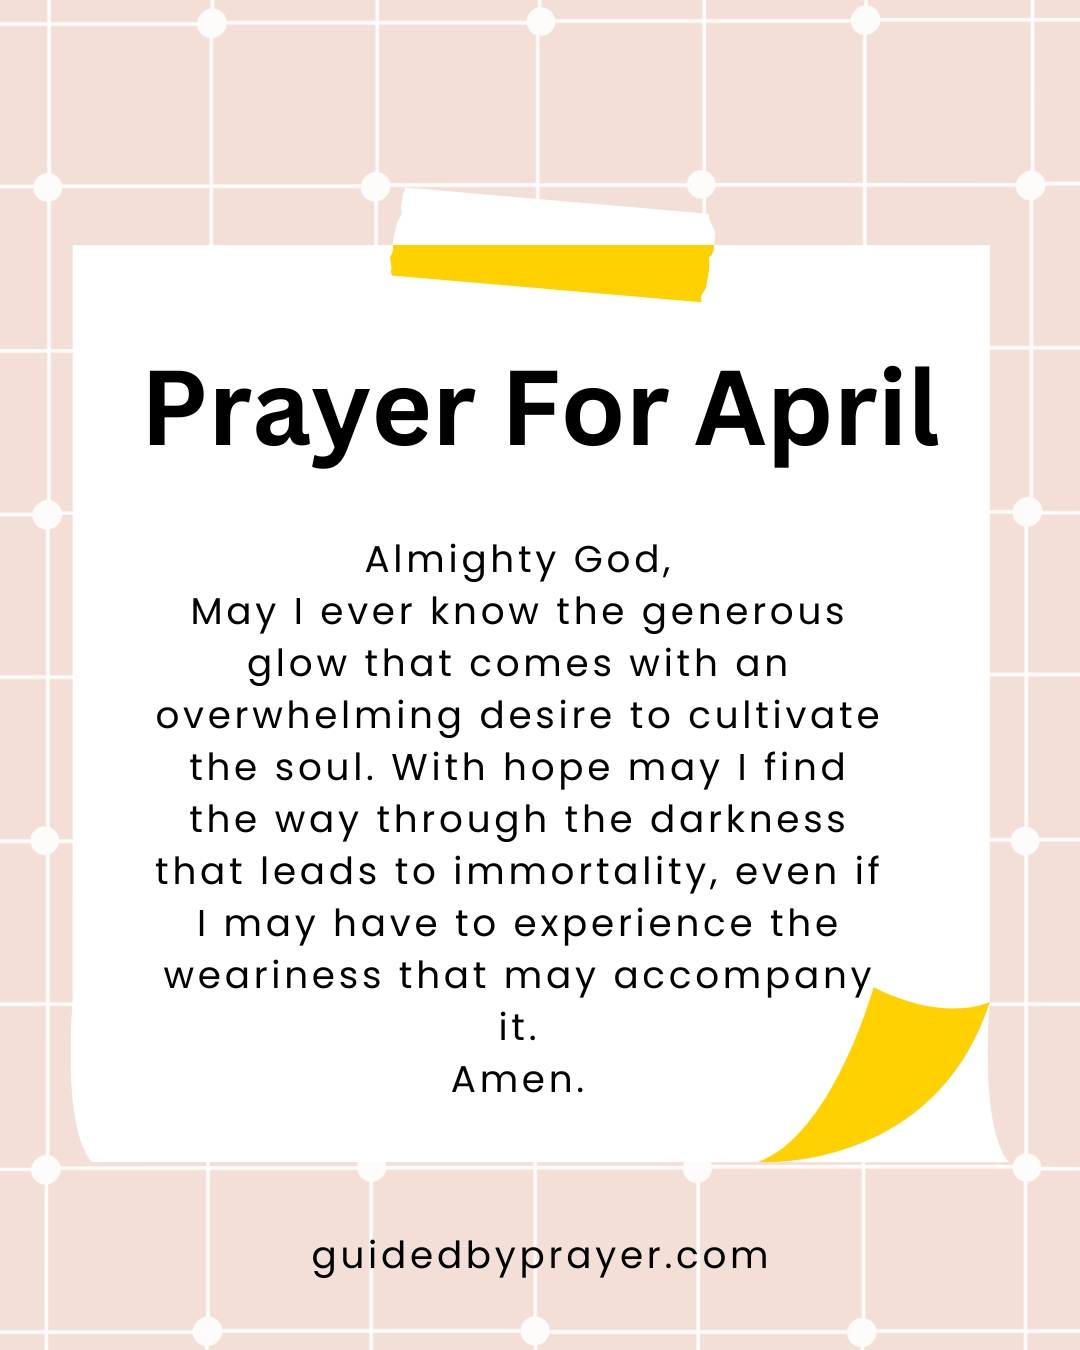 Prayer For April Guided by Prayer